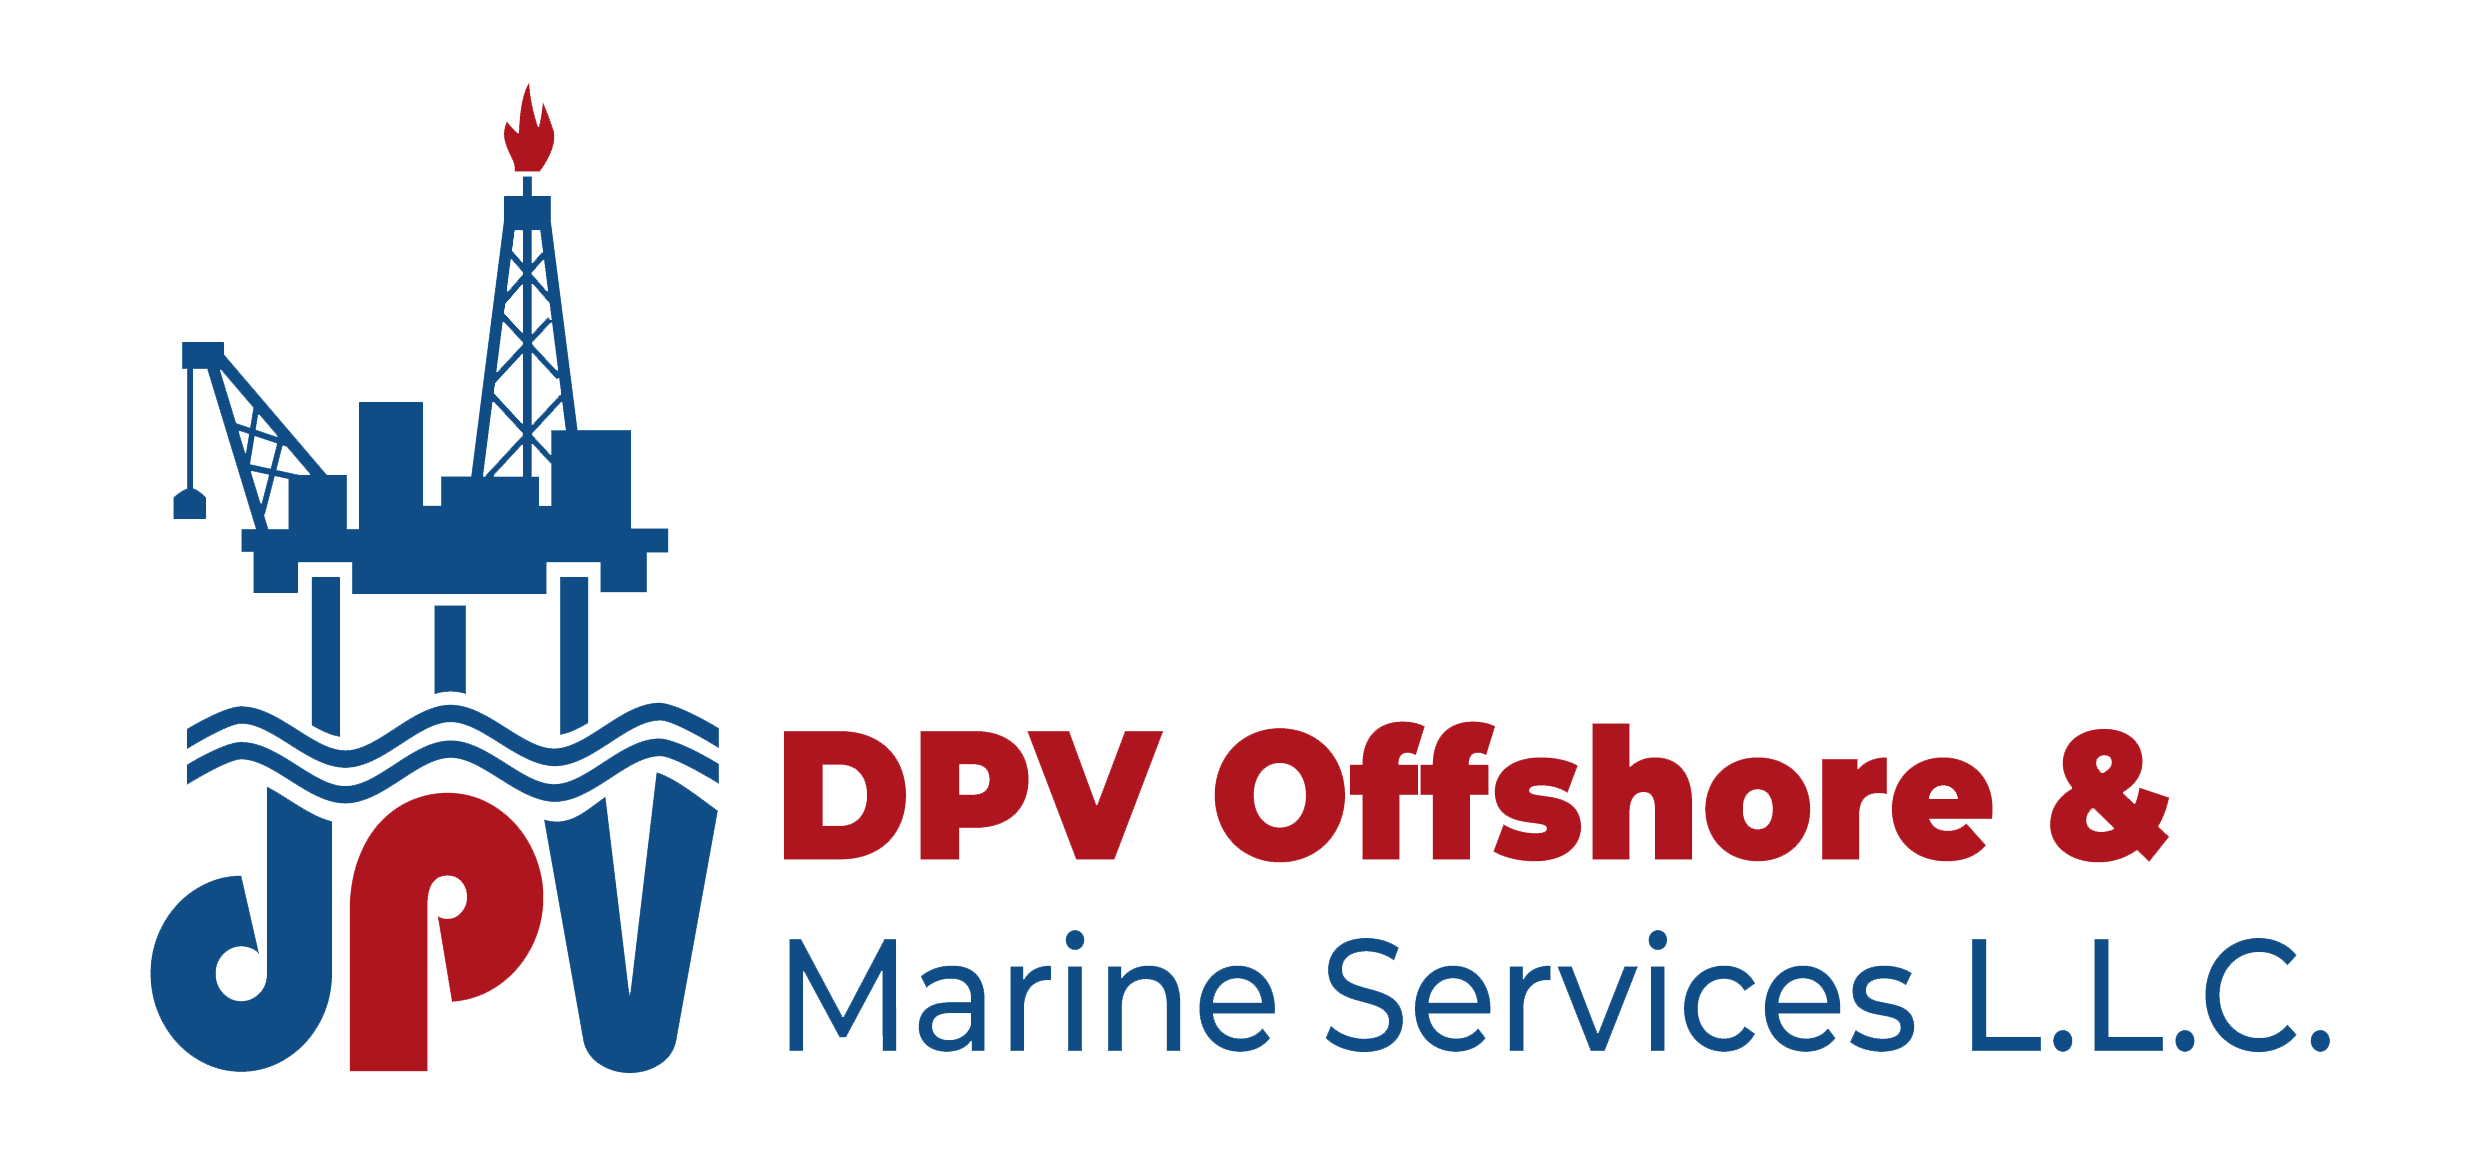 DPV Offshore